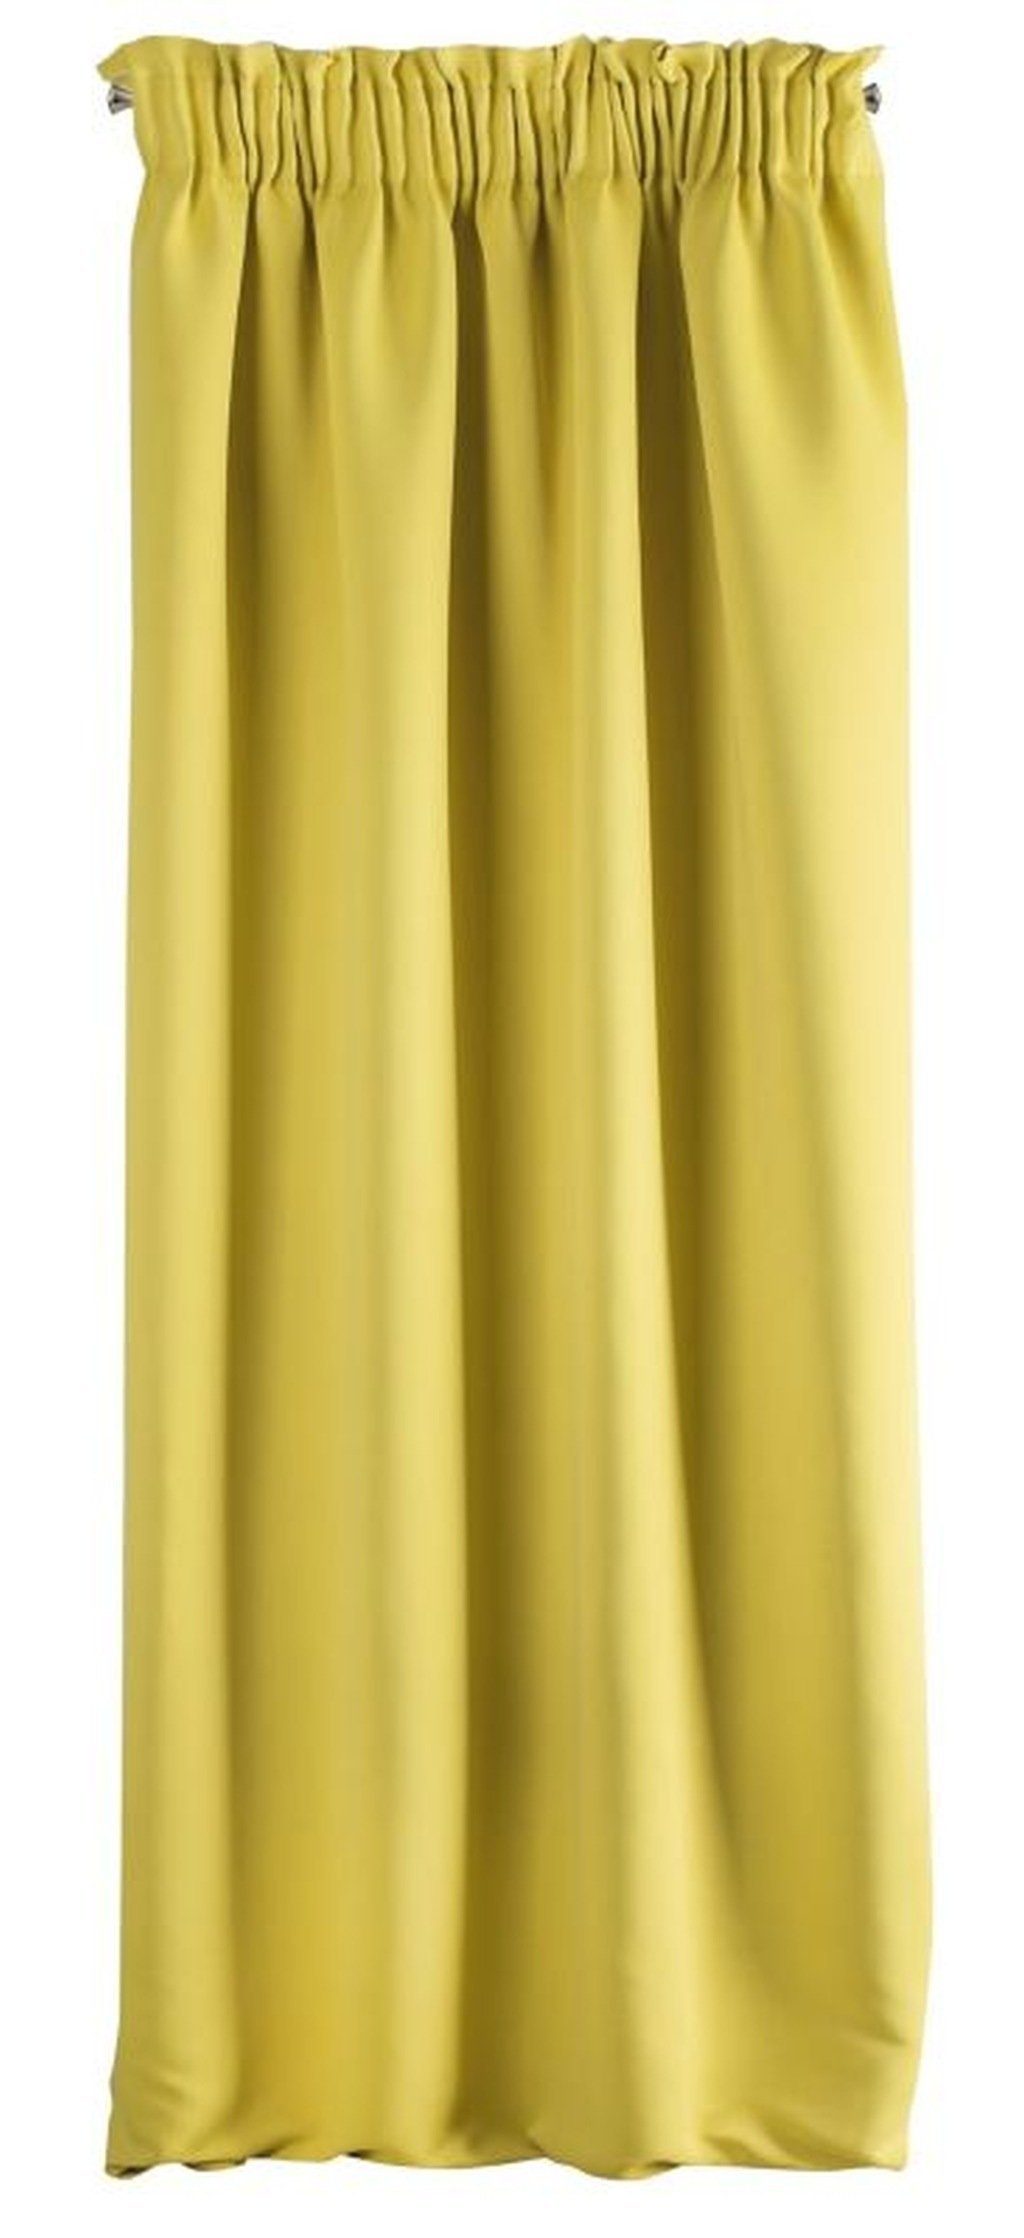 Vorhang Vorhang Kräuselband Verdunkelung Hochwertig Gelb - Zitrone  135x270cm (2 Stück), Mariall, Kräuselband